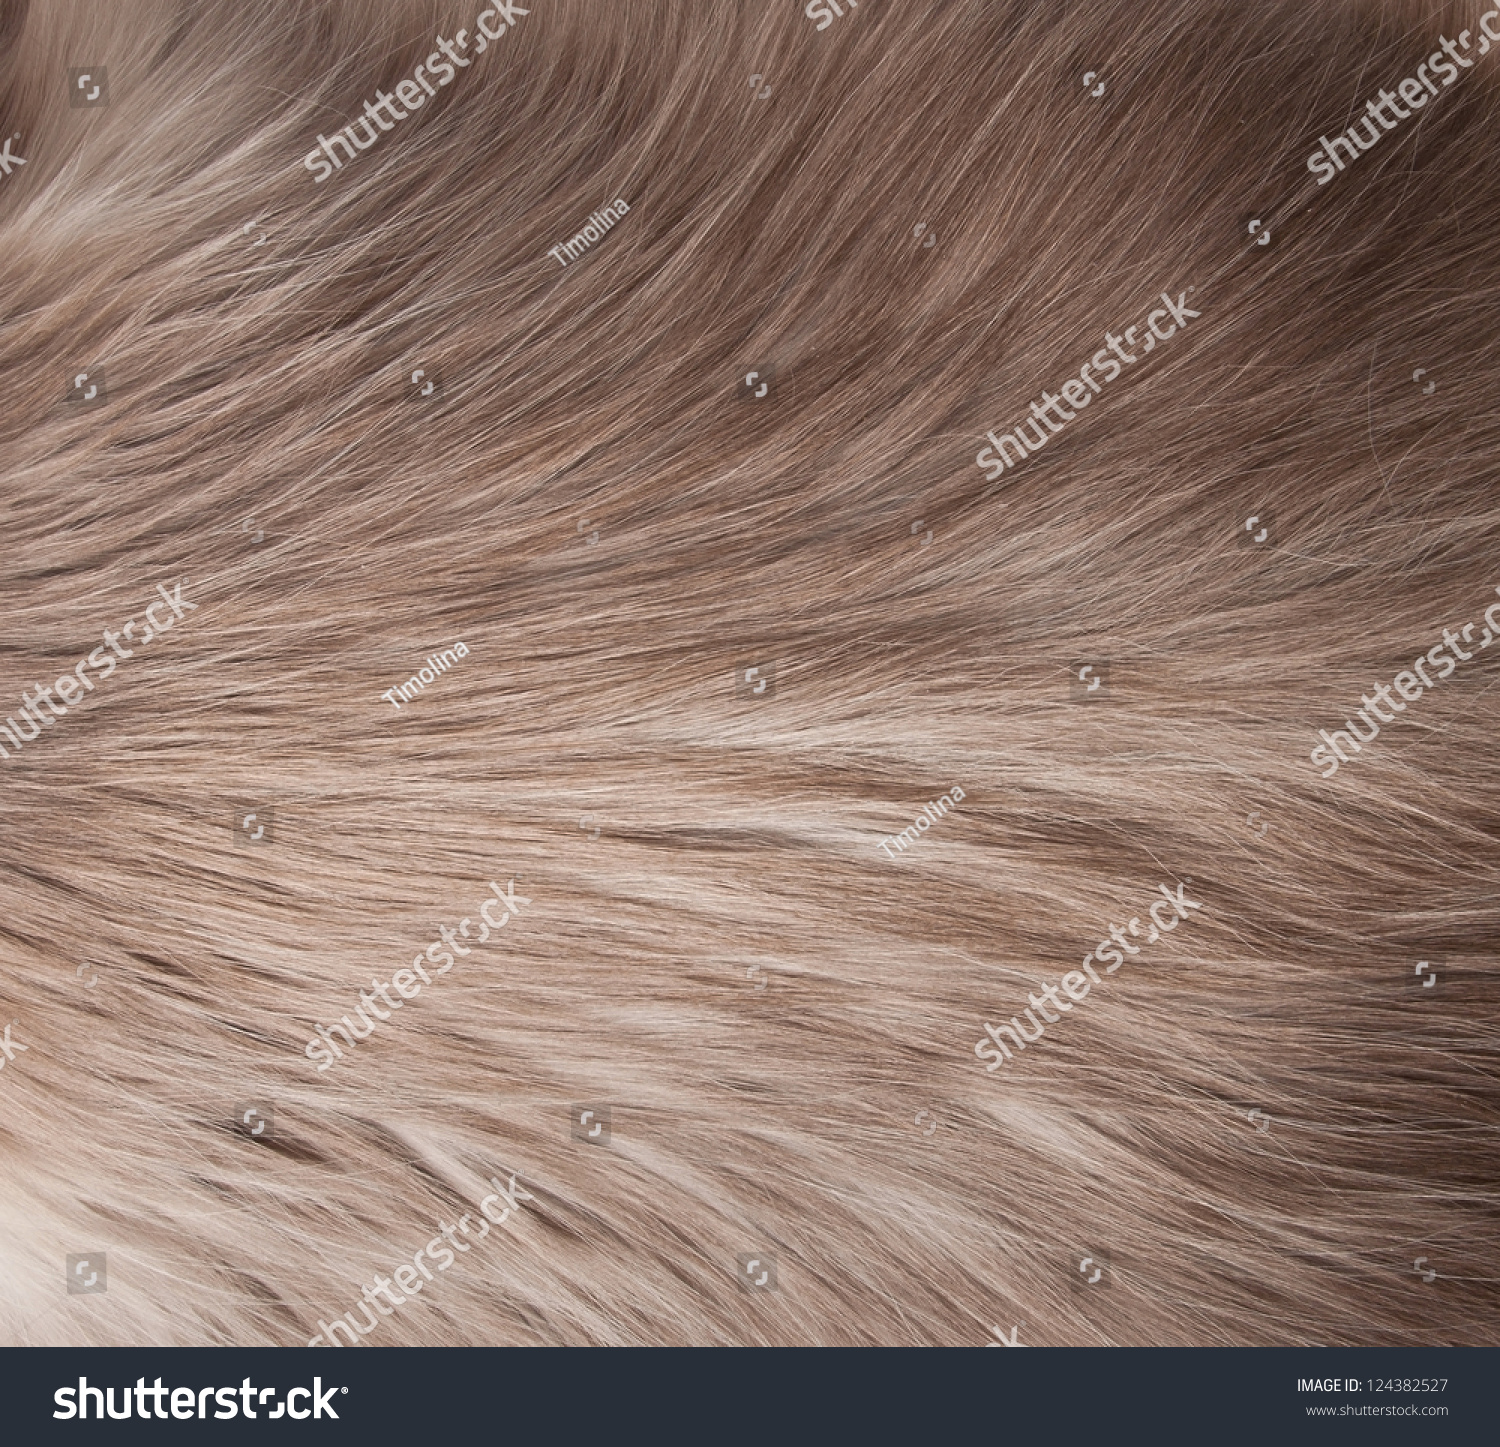  fur texture close-up background #124382527